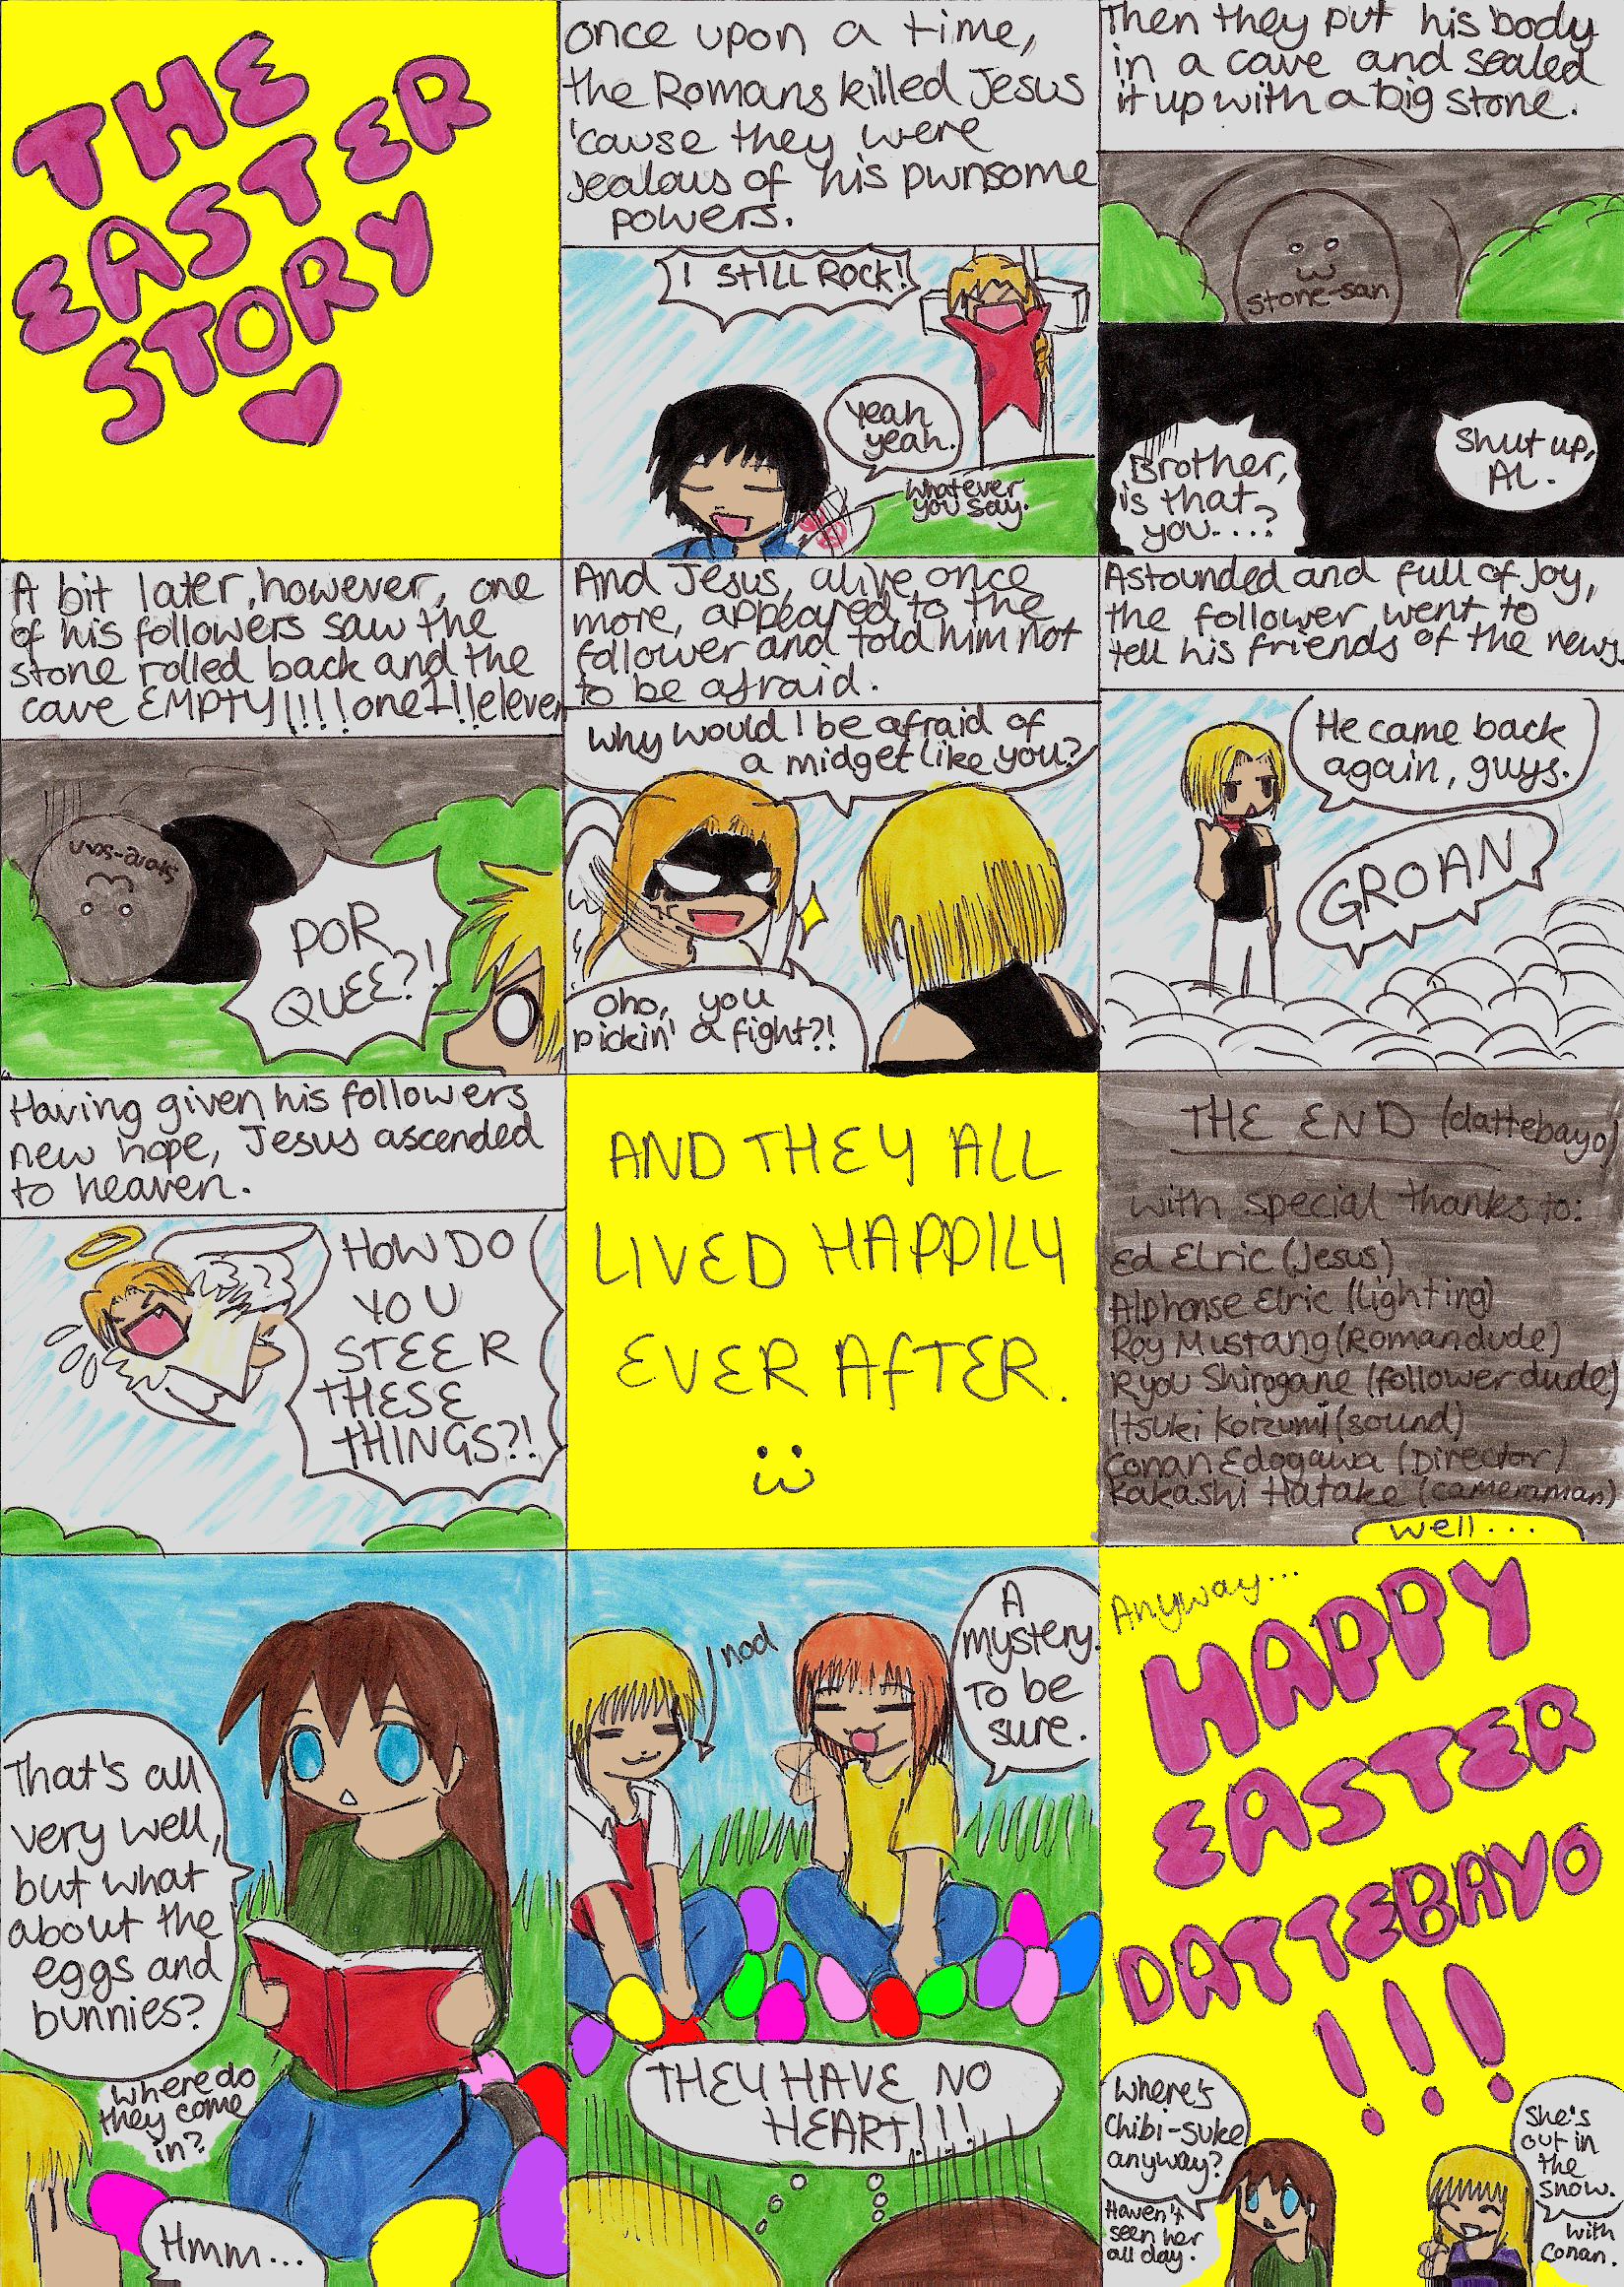 HAPPY EASTER EVERYONE! by CoStanleyQueen5